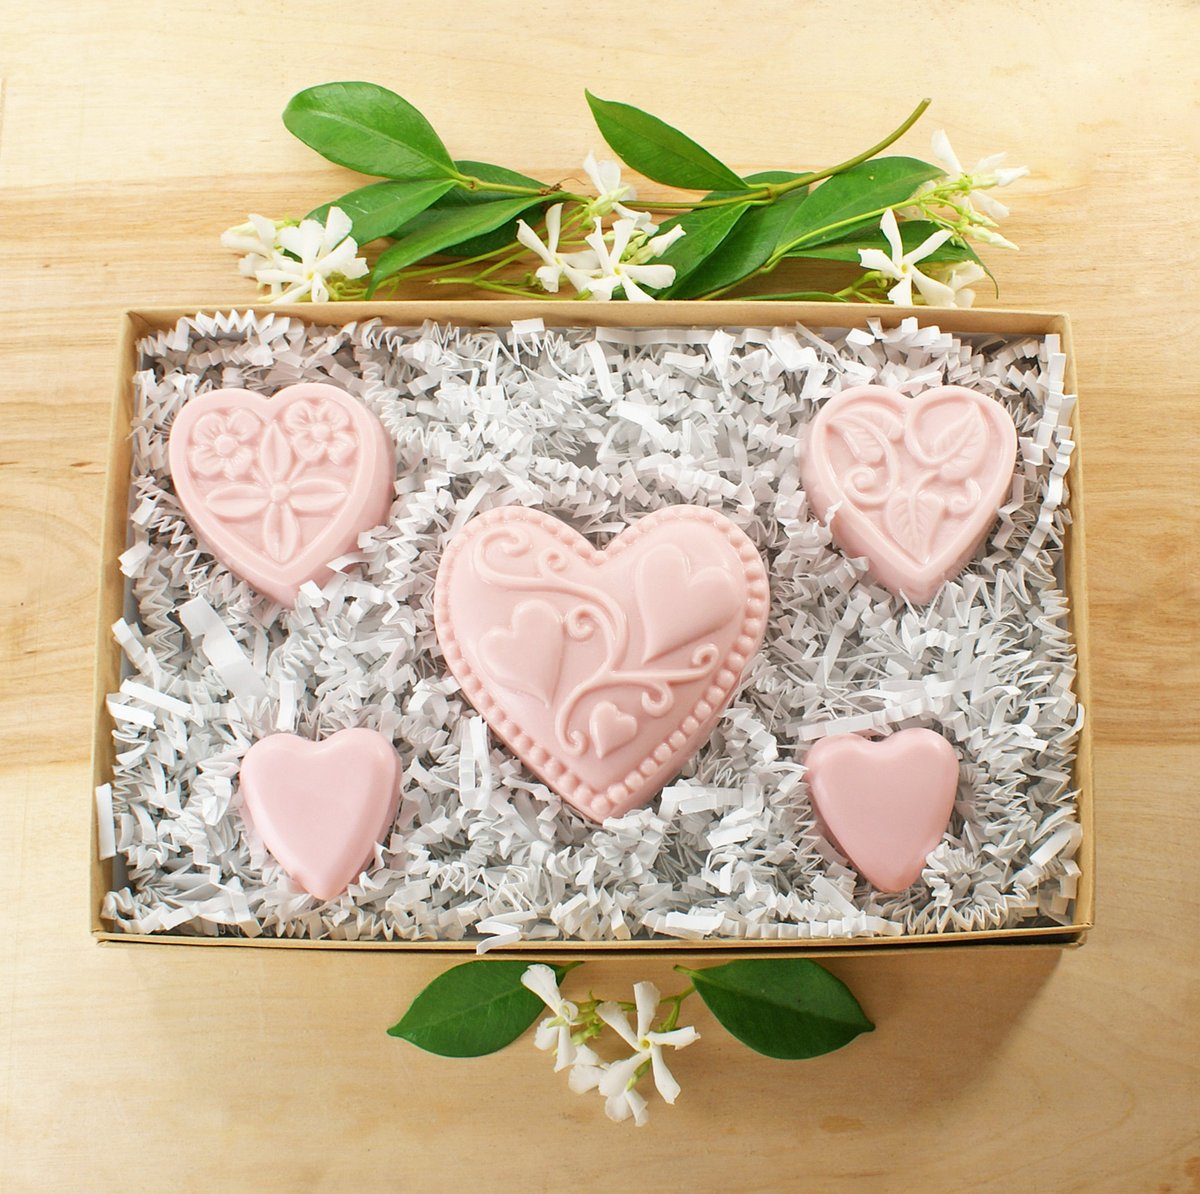 Pink Heart Soap for Mothers Day Gift From Daughter or Son. Soap Gift Set. Pamper Kit of Glycerin Soap. First Mothers Day Gift. Box of Hearts #MothersDay #gift #hearts #pink #giftidea #love #shop #shopetsy #shoponline #integritytt 
etsy.me/2QqKbXC via @Etsy